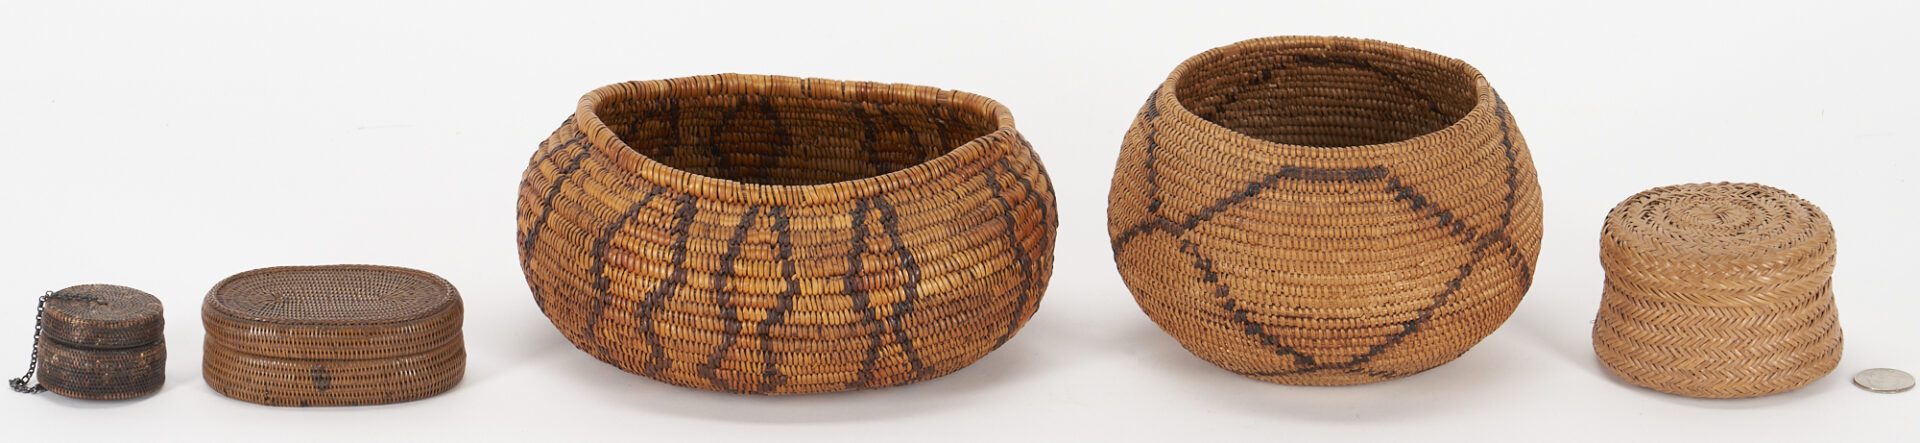 Lot 548: 5 Native American Baskets